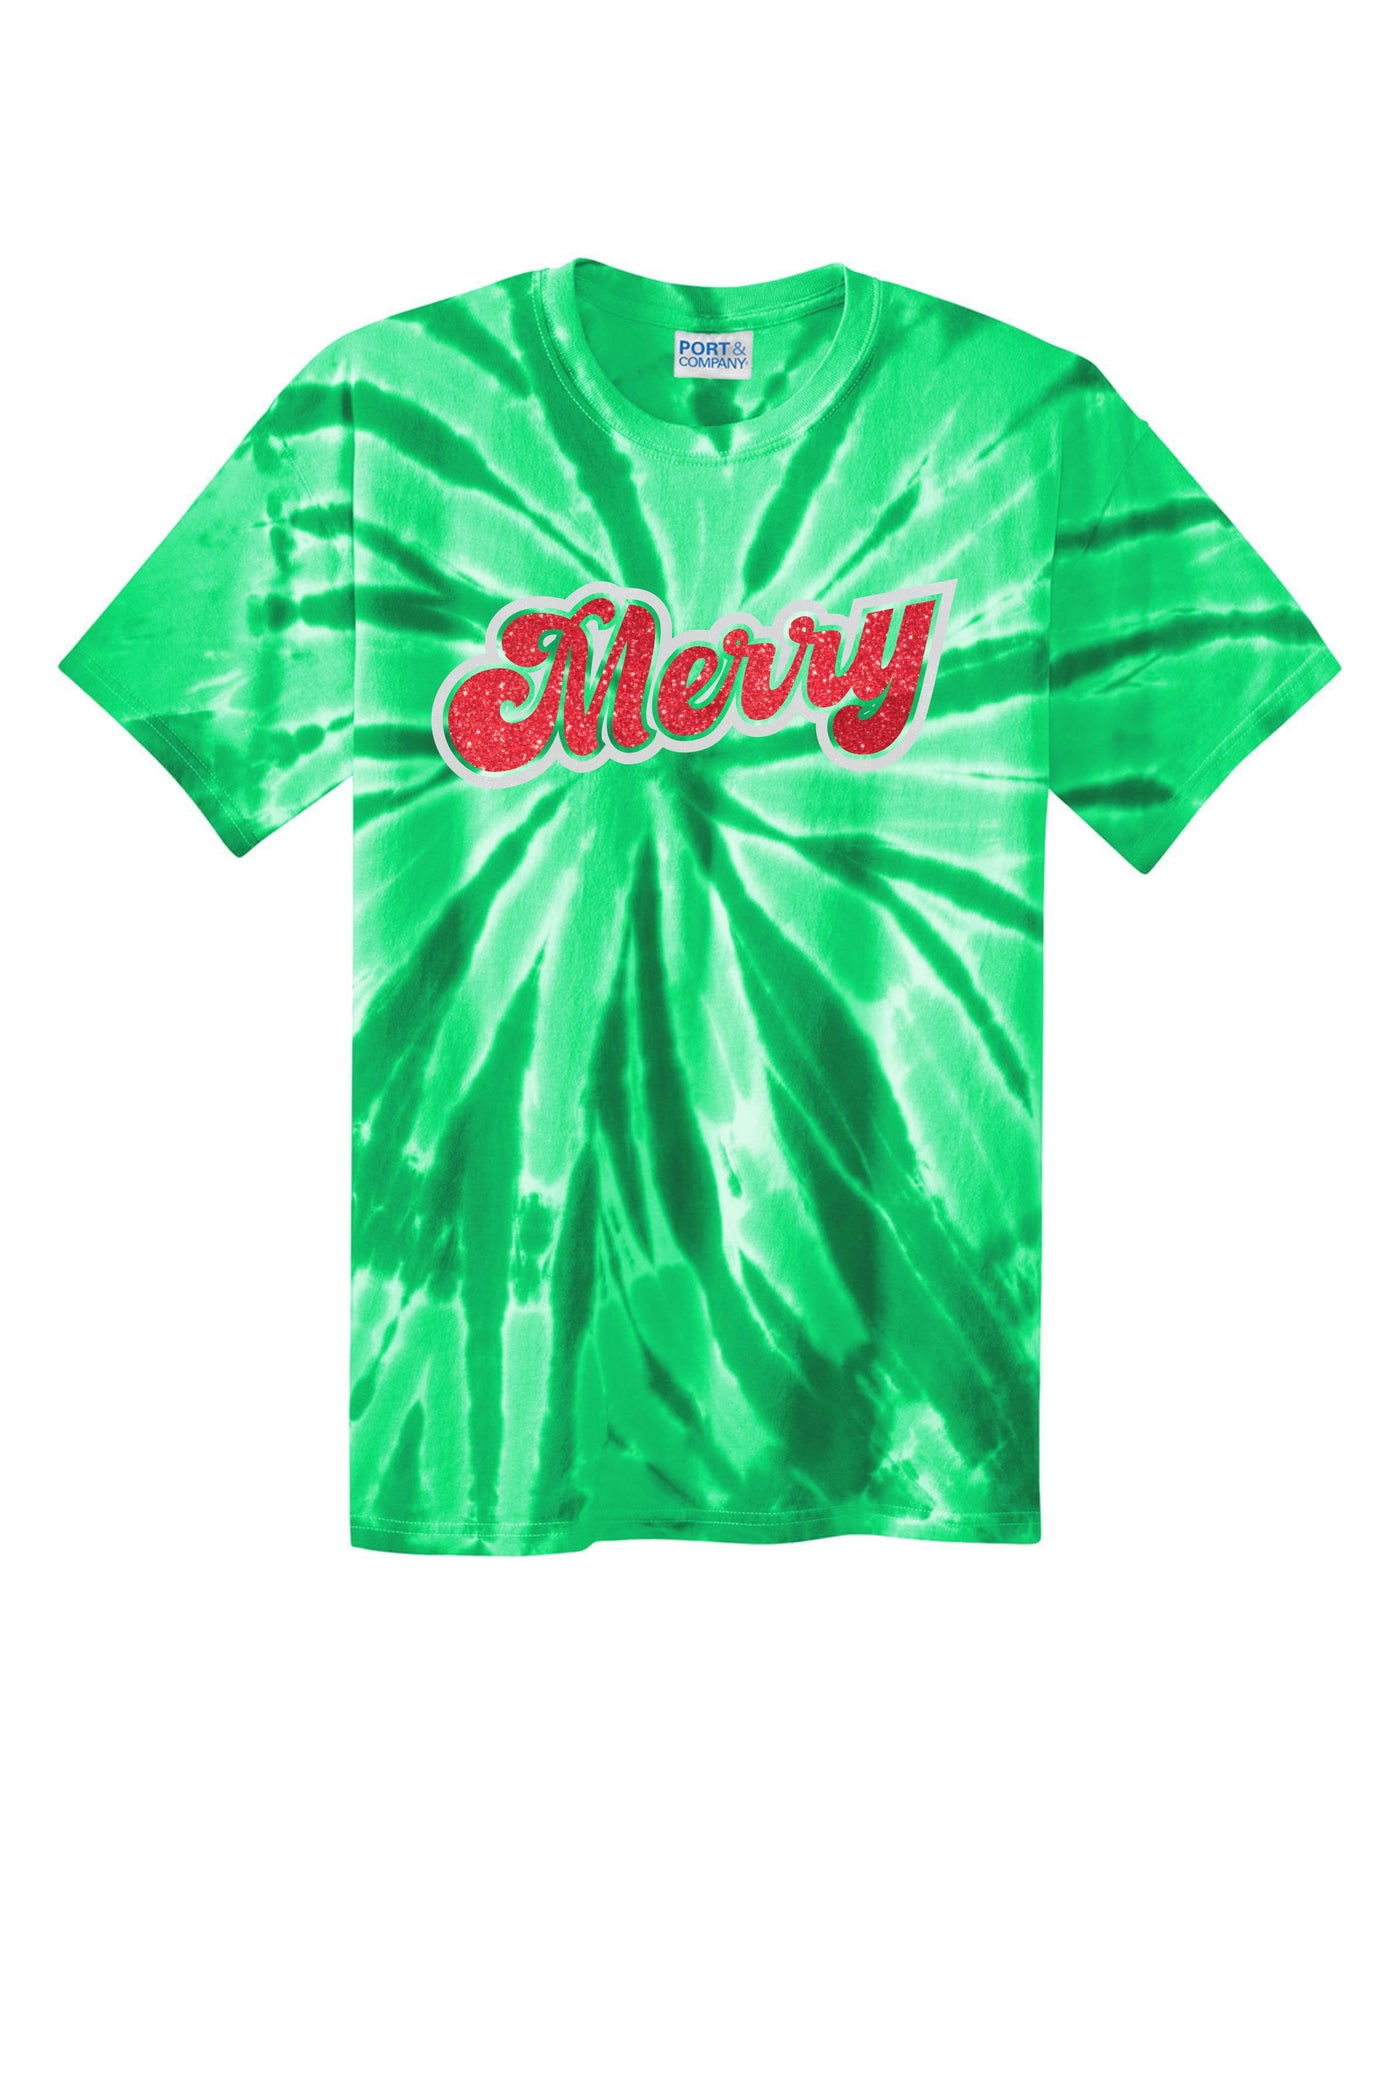 Merry Tie Dye Christmas T-shirt